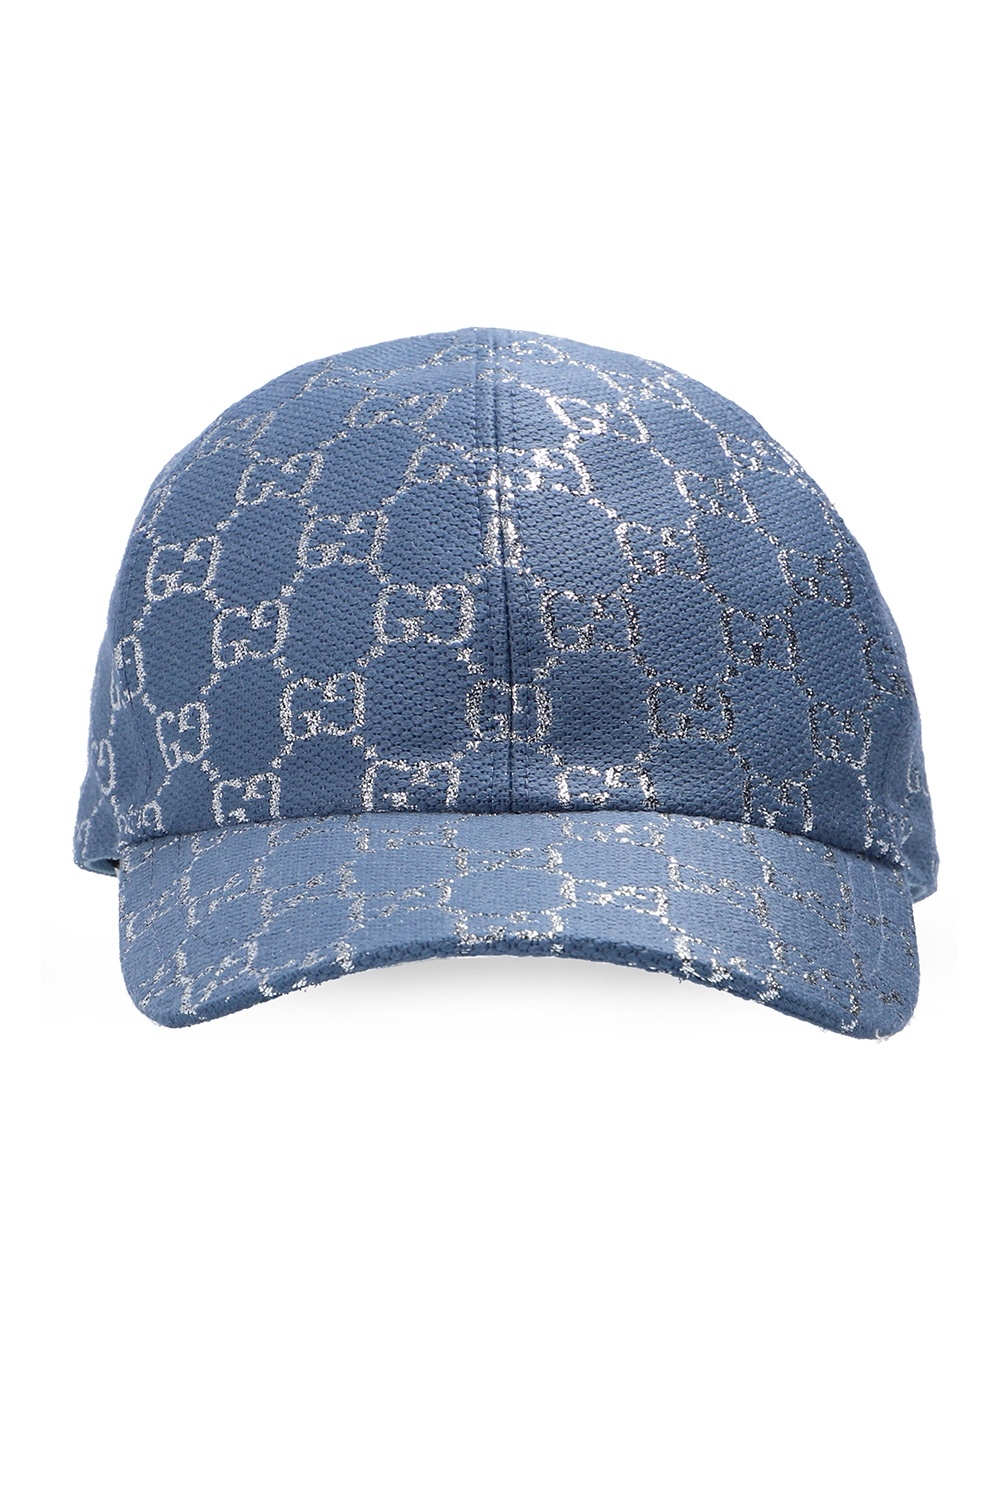 Gucci, Accessories, Gucci Gg Logo Monogram Denim Baseball Cap Hat